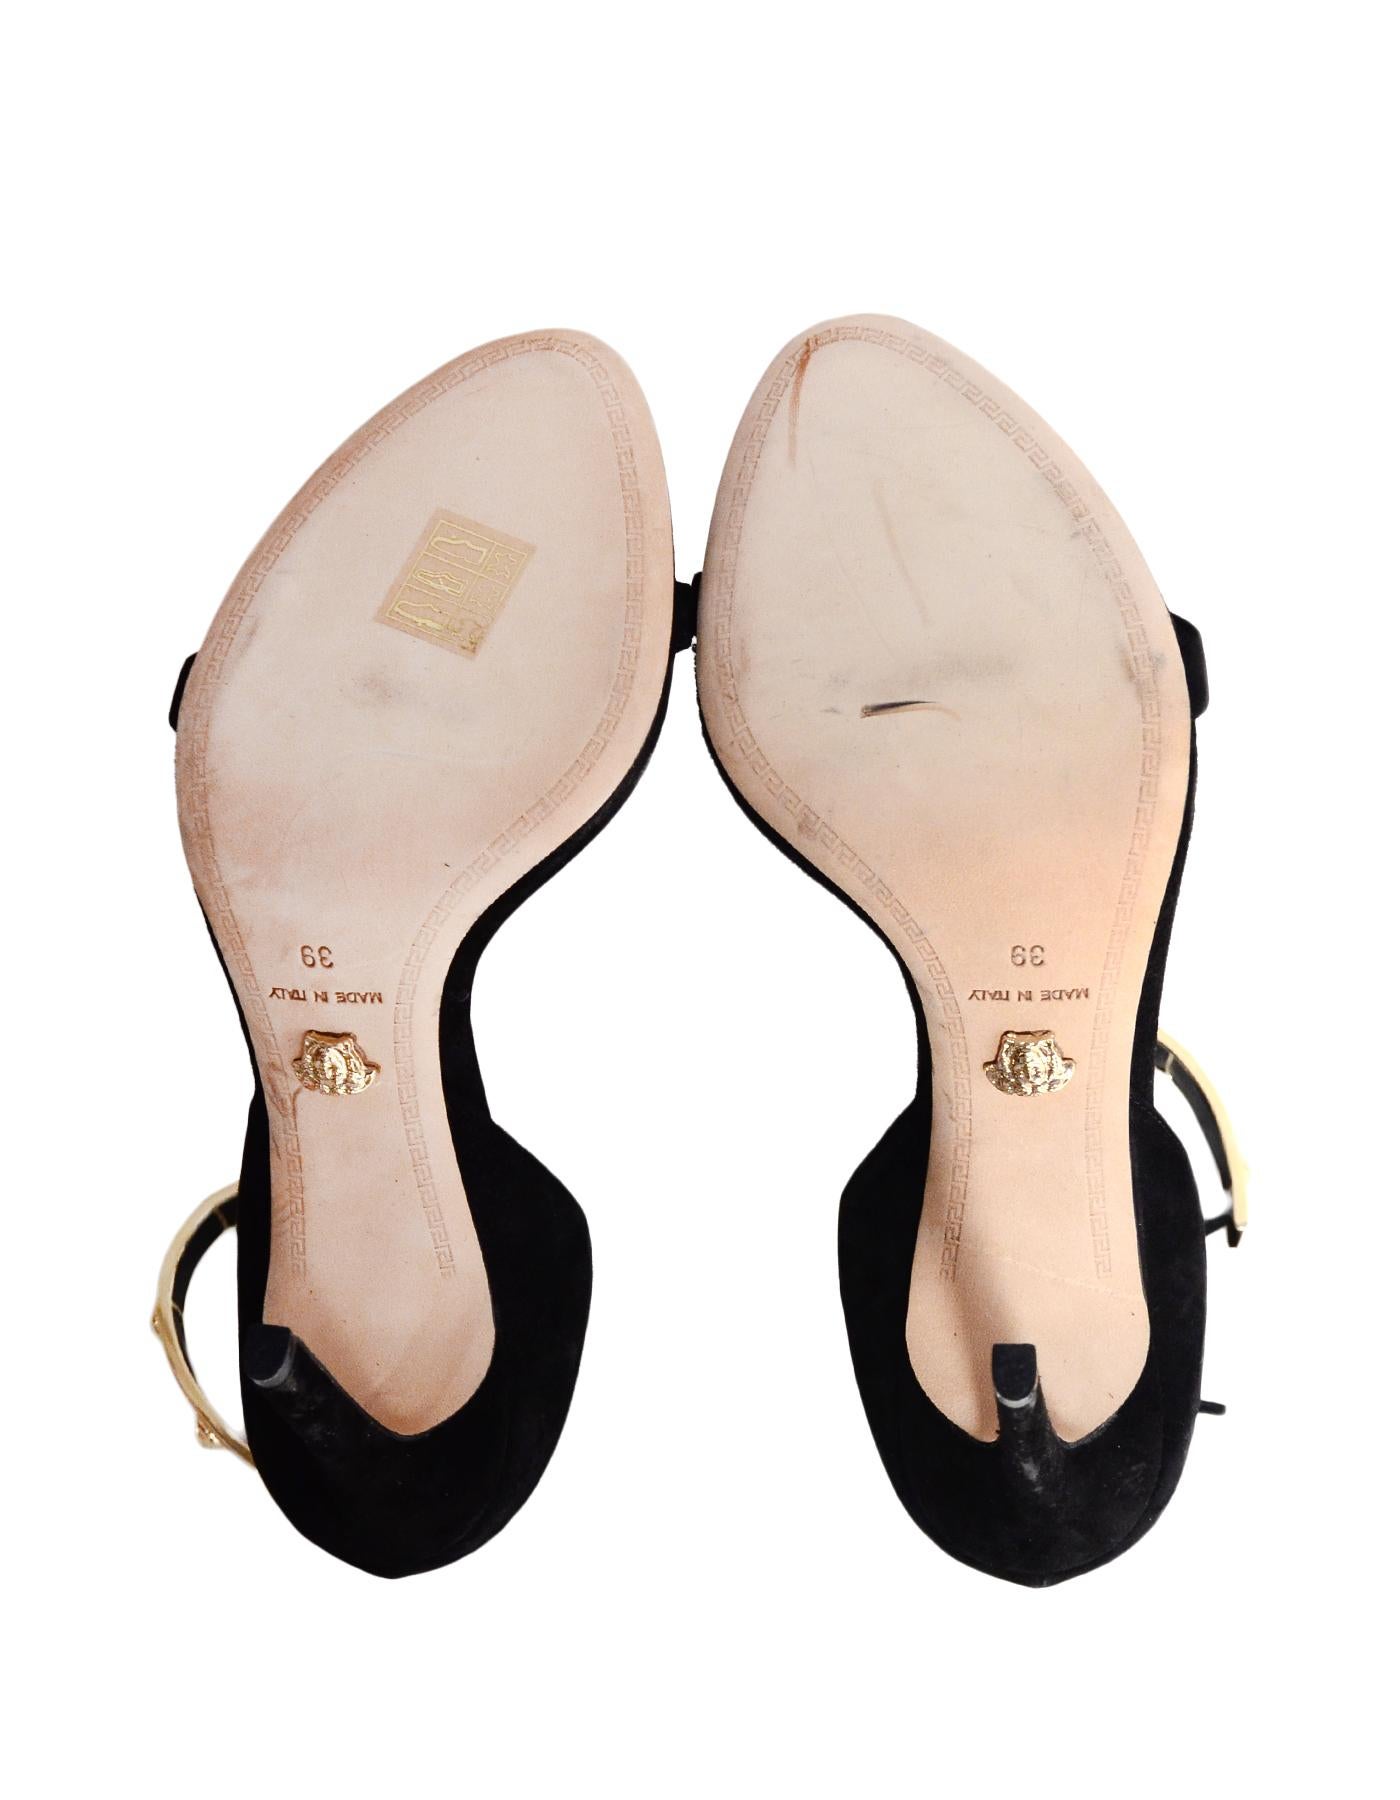 Versace Black Suede Sandals W/ Goldtone Metal Medusa Ankle Strap Sz 39 1